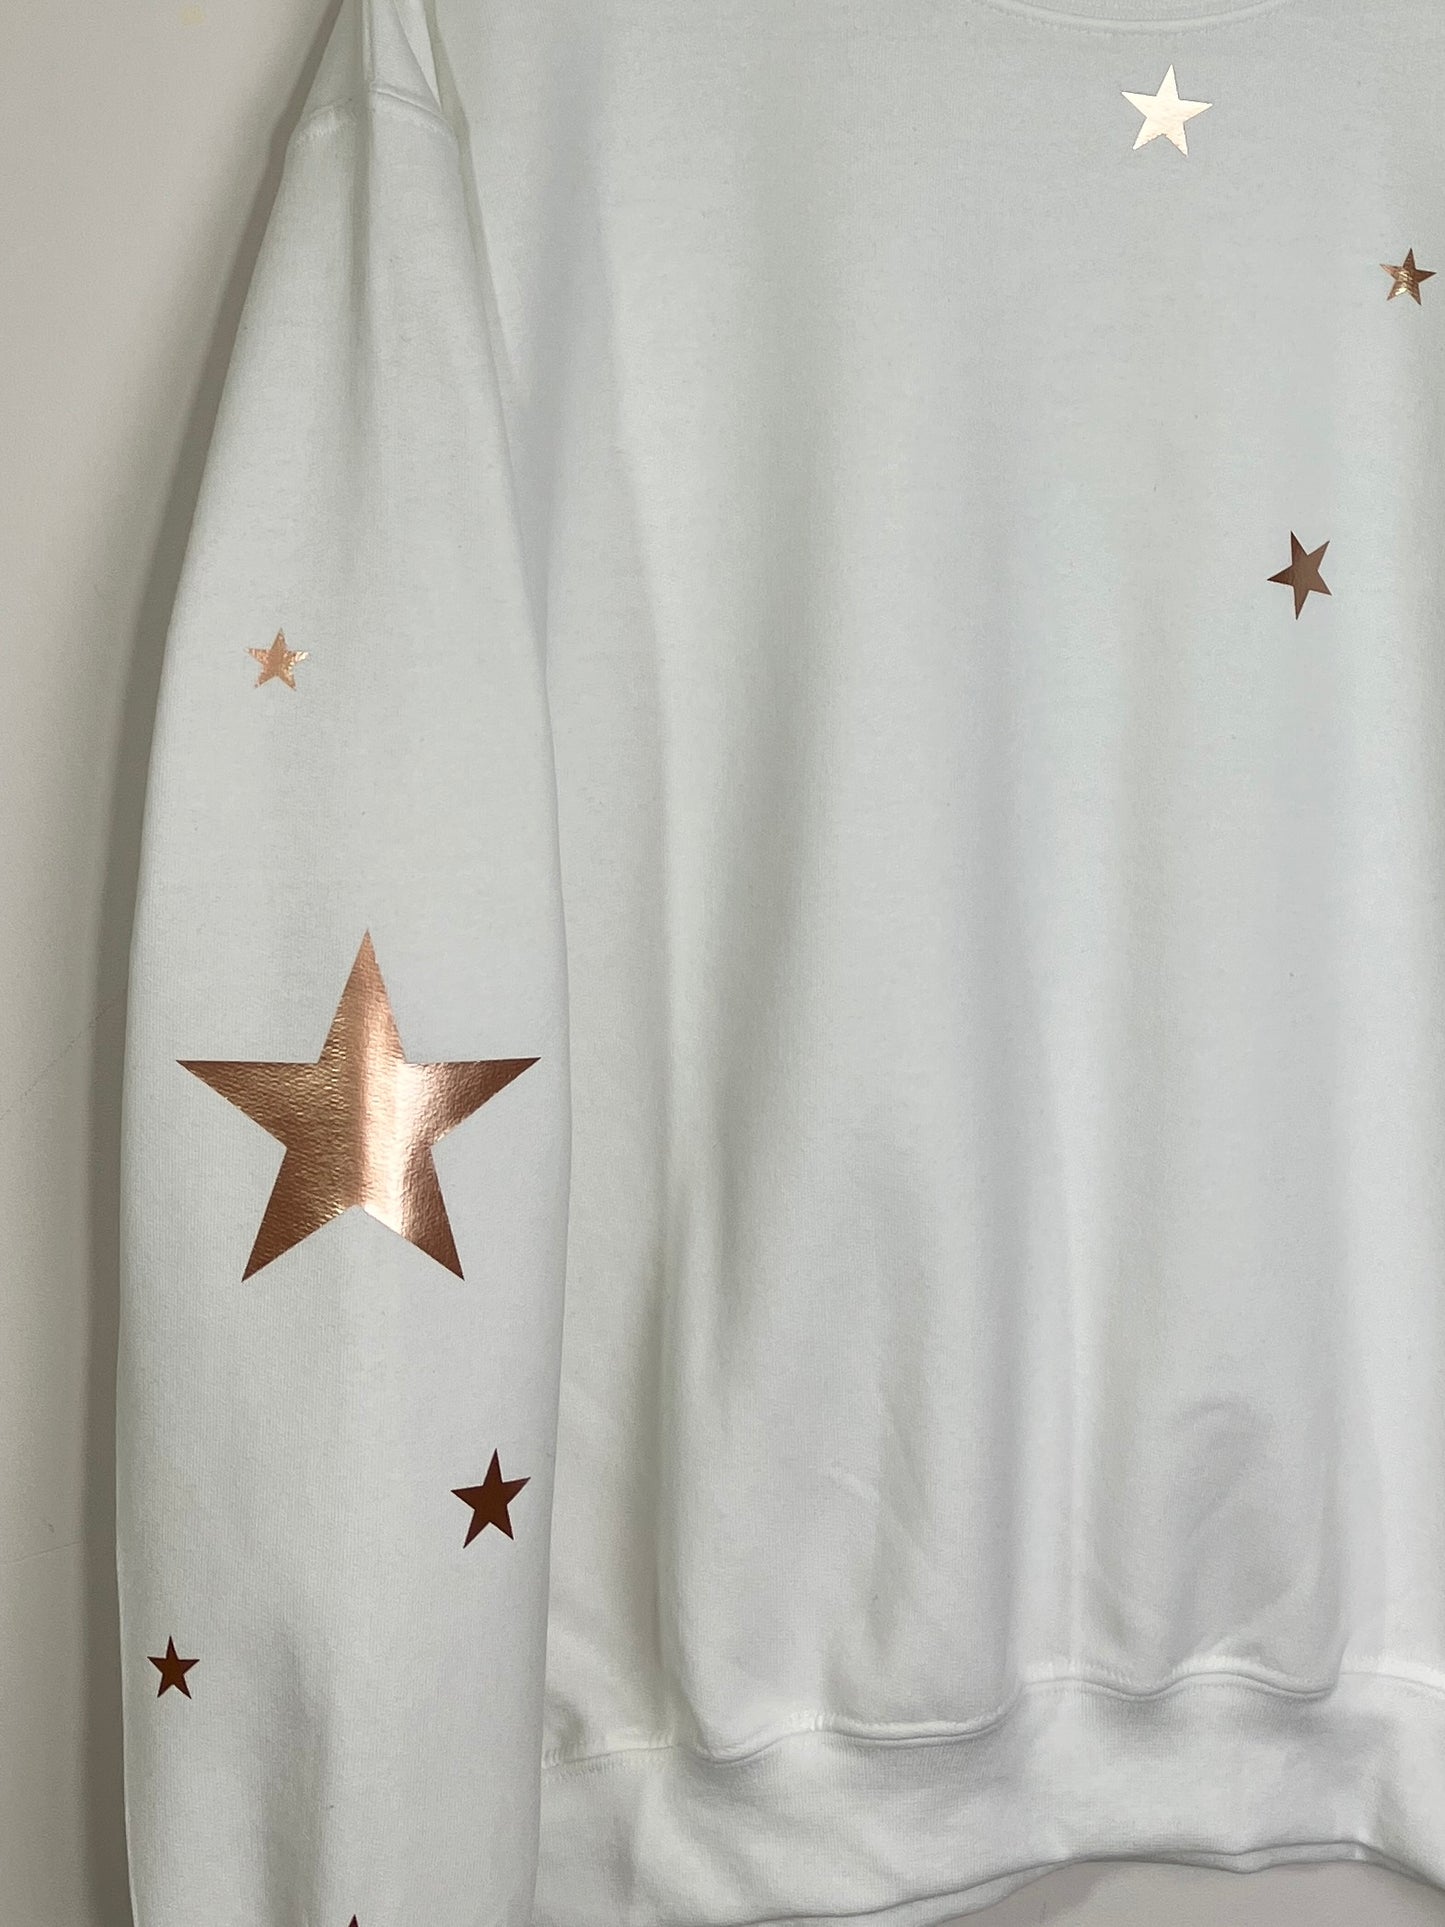 Star sleeved sweatshirt